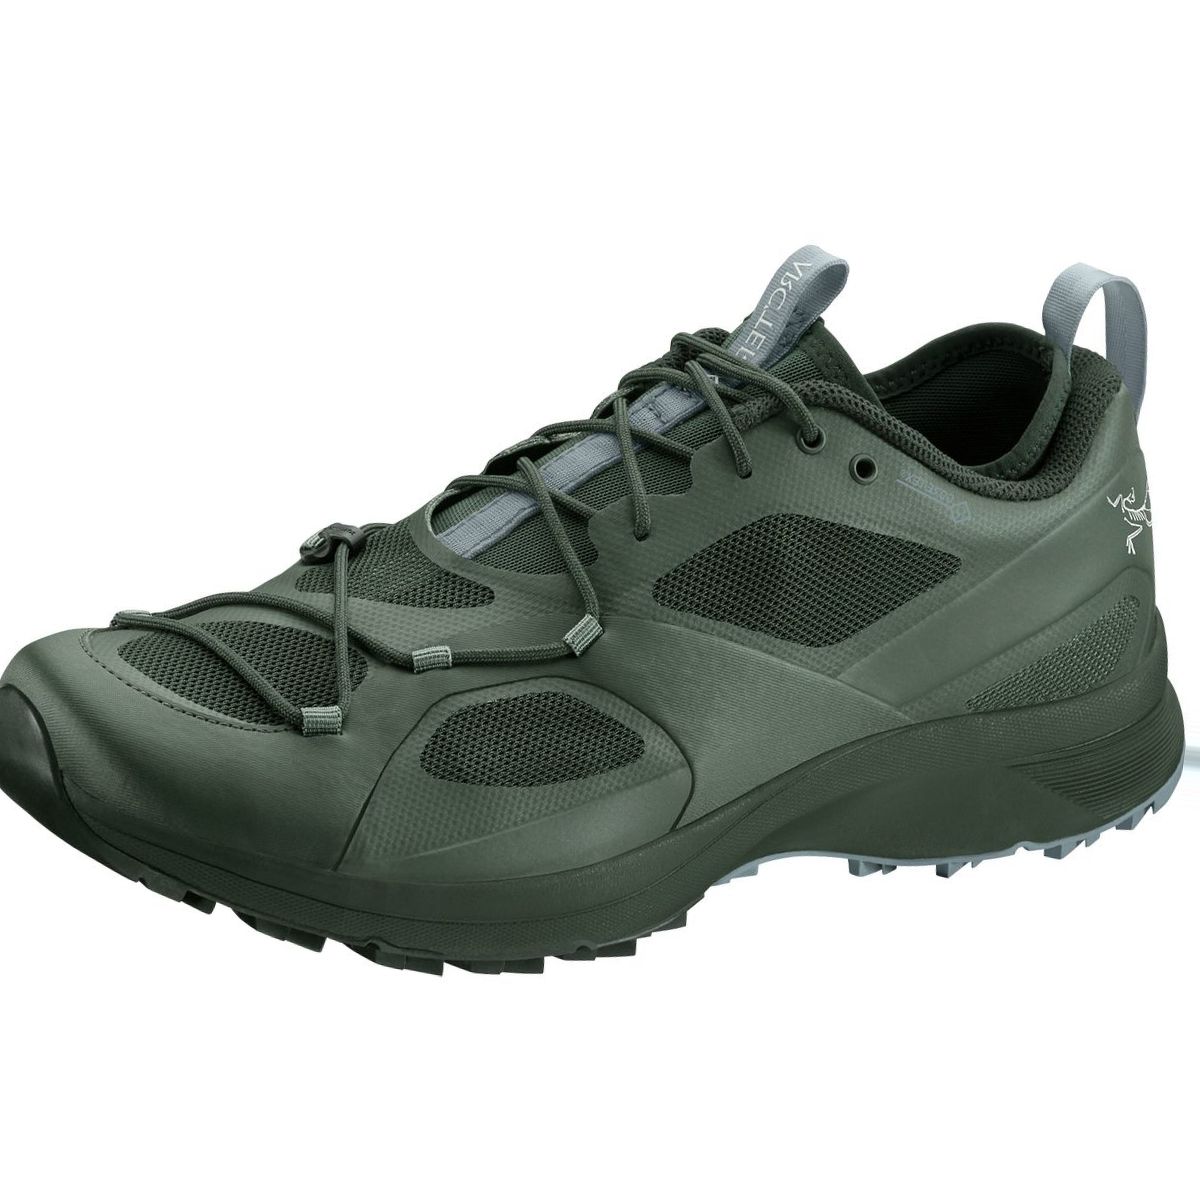 Arc'teryx Norvan VT Trail Running Shoe - Men's